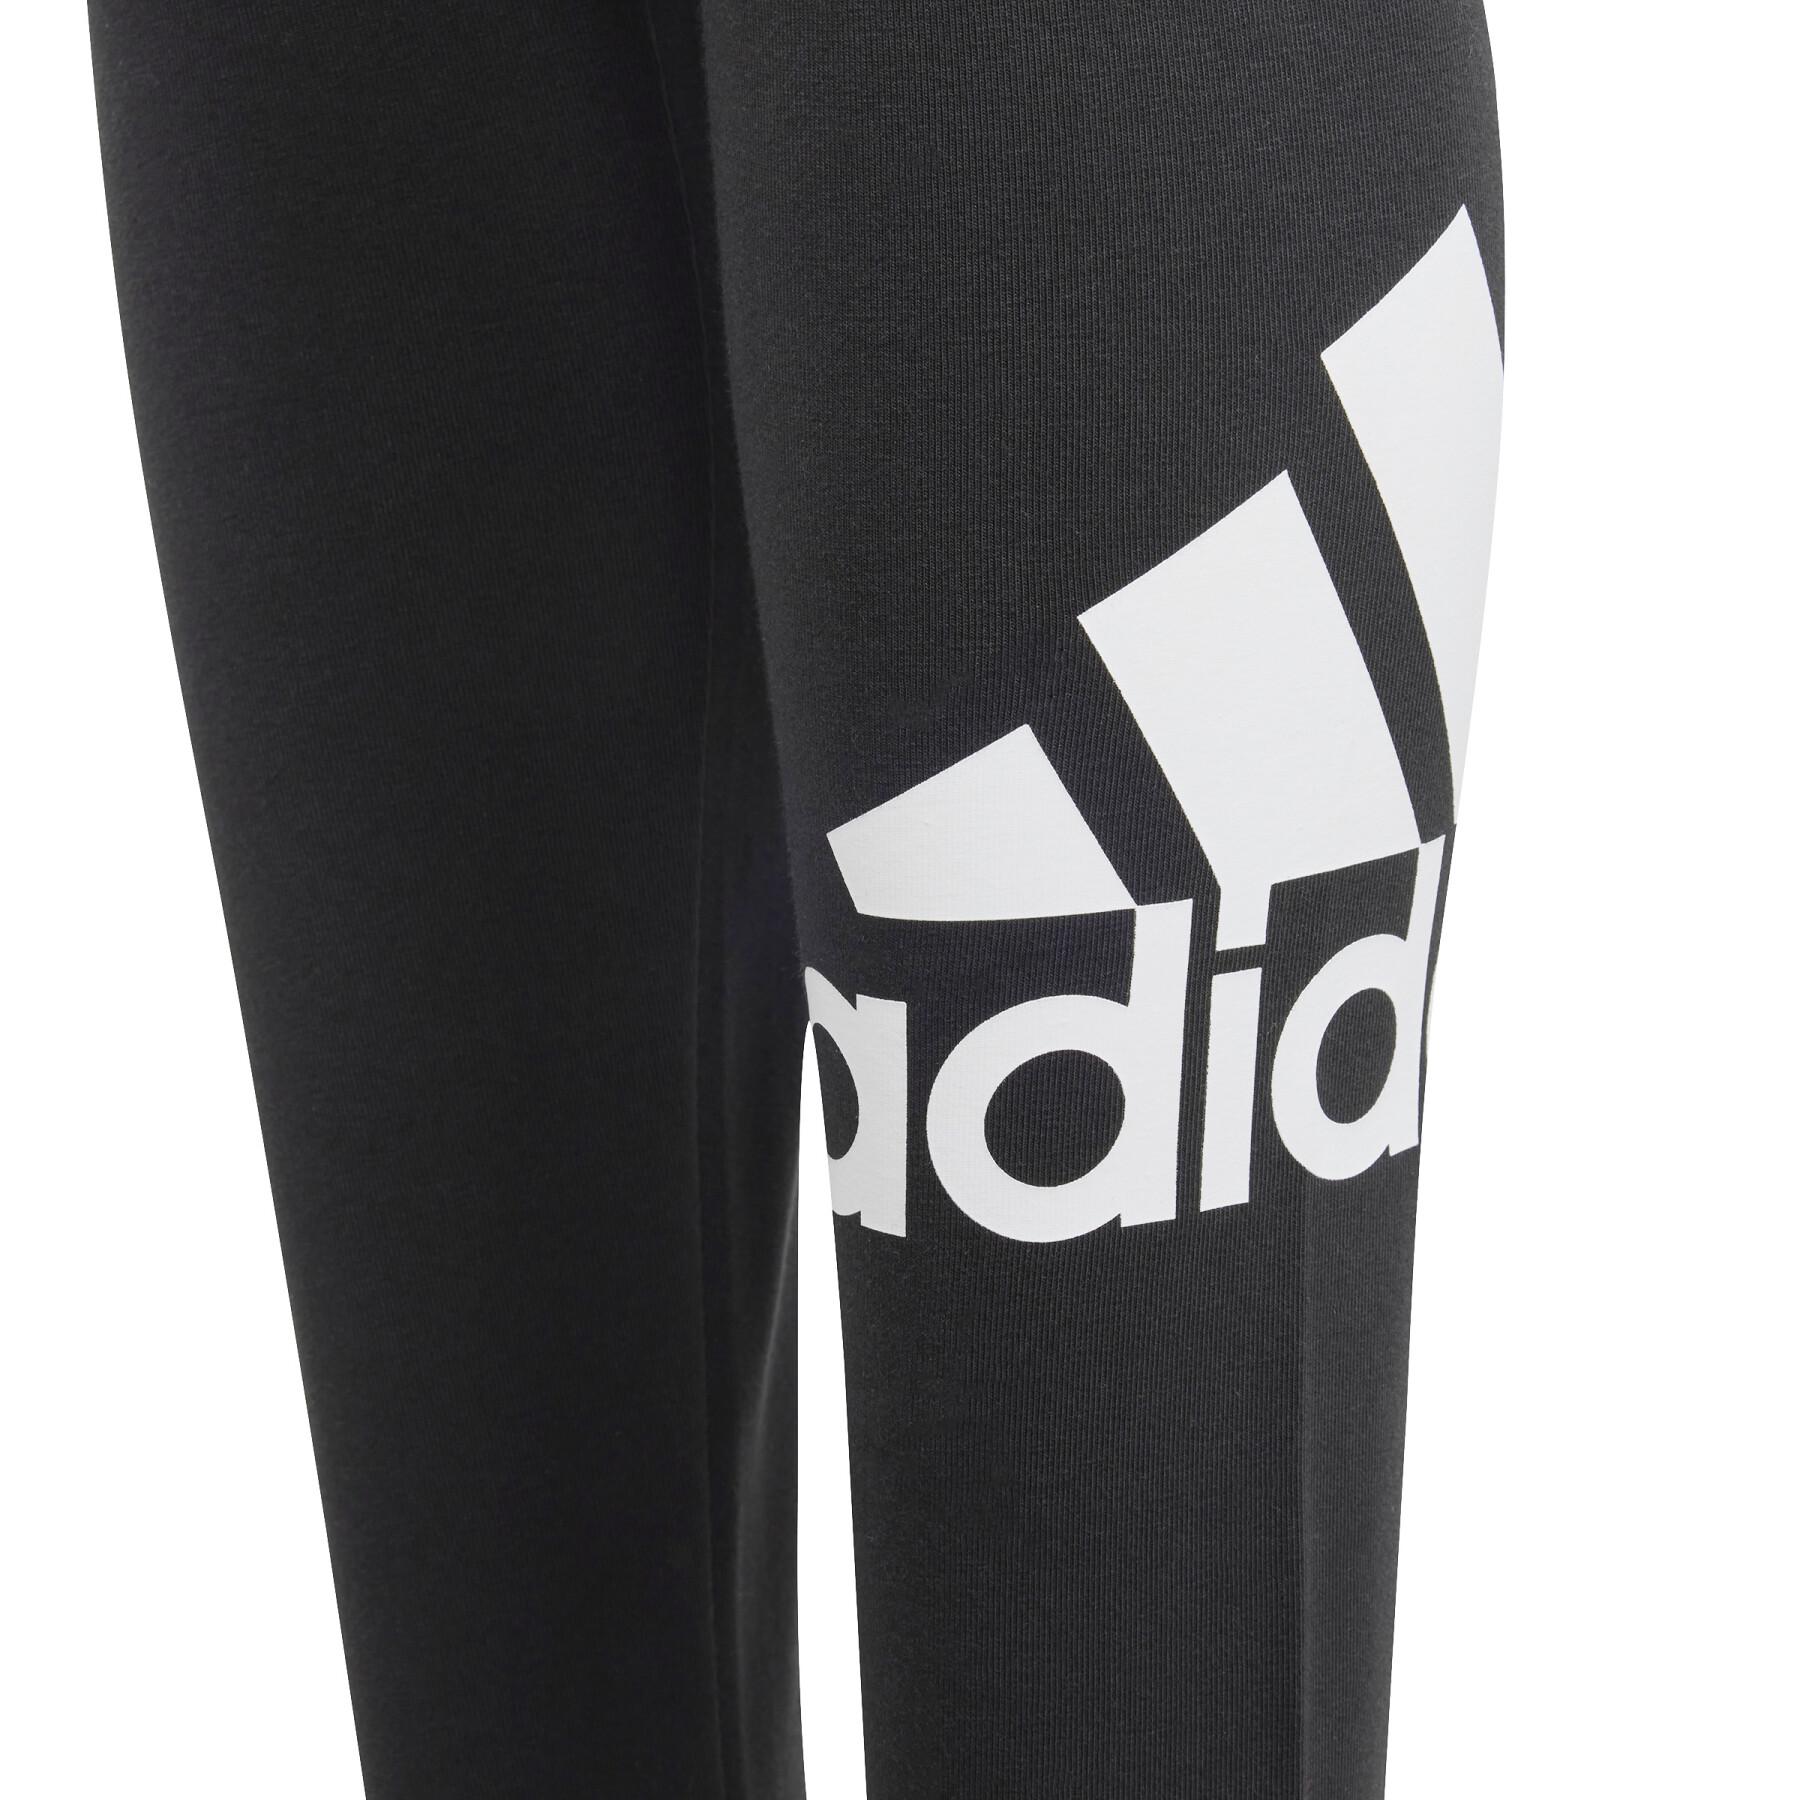 cotton - Legging Textile Baselayers wear - Essentials Big adidas girl Logo - Handball